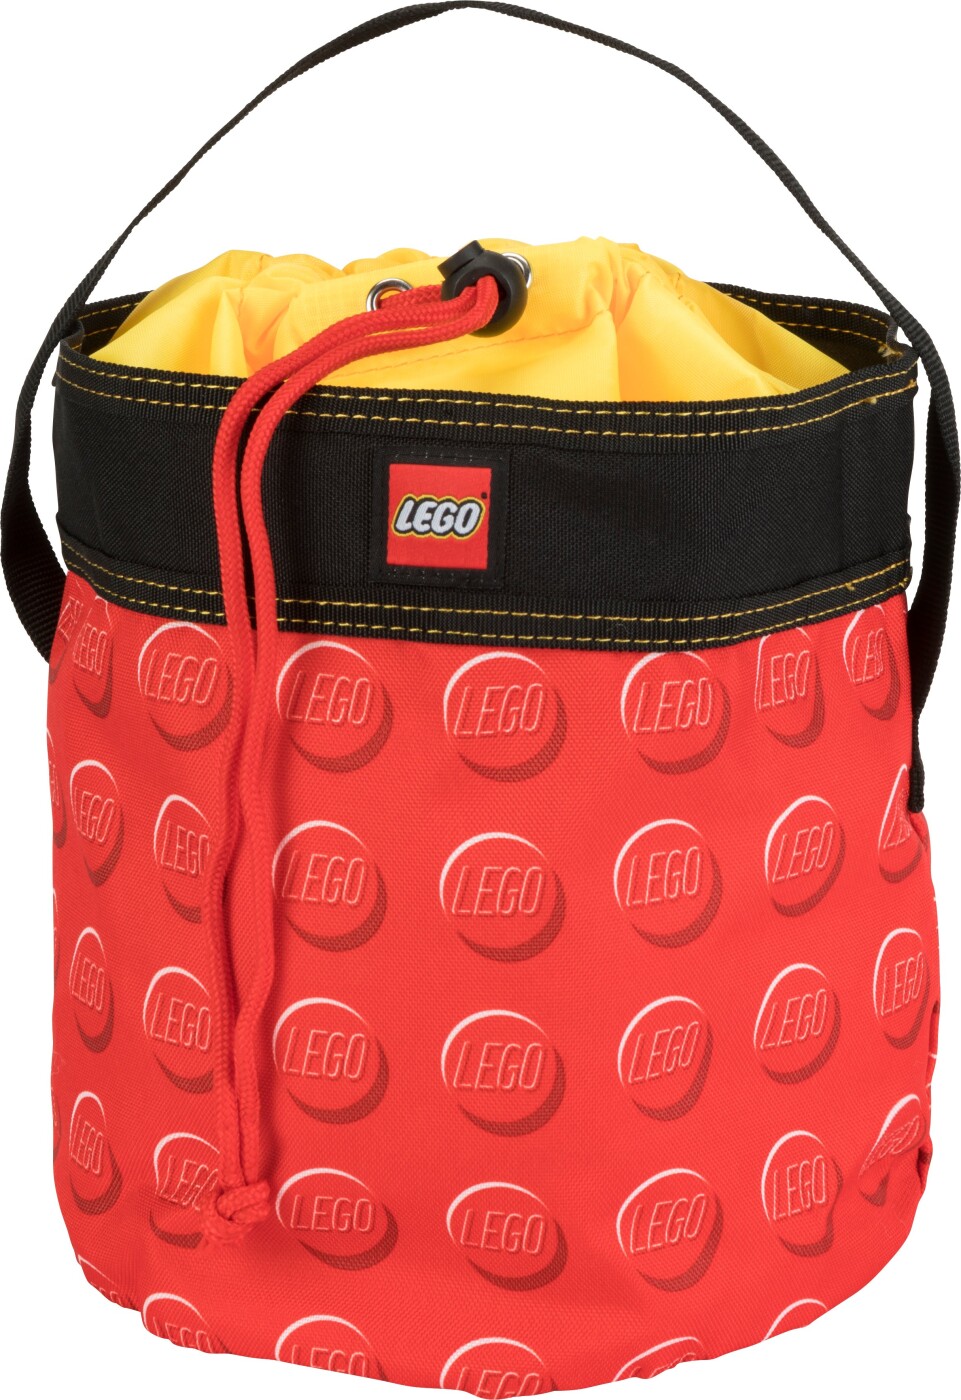 Lego Opbevarings Spand - Rød (6.3 L)